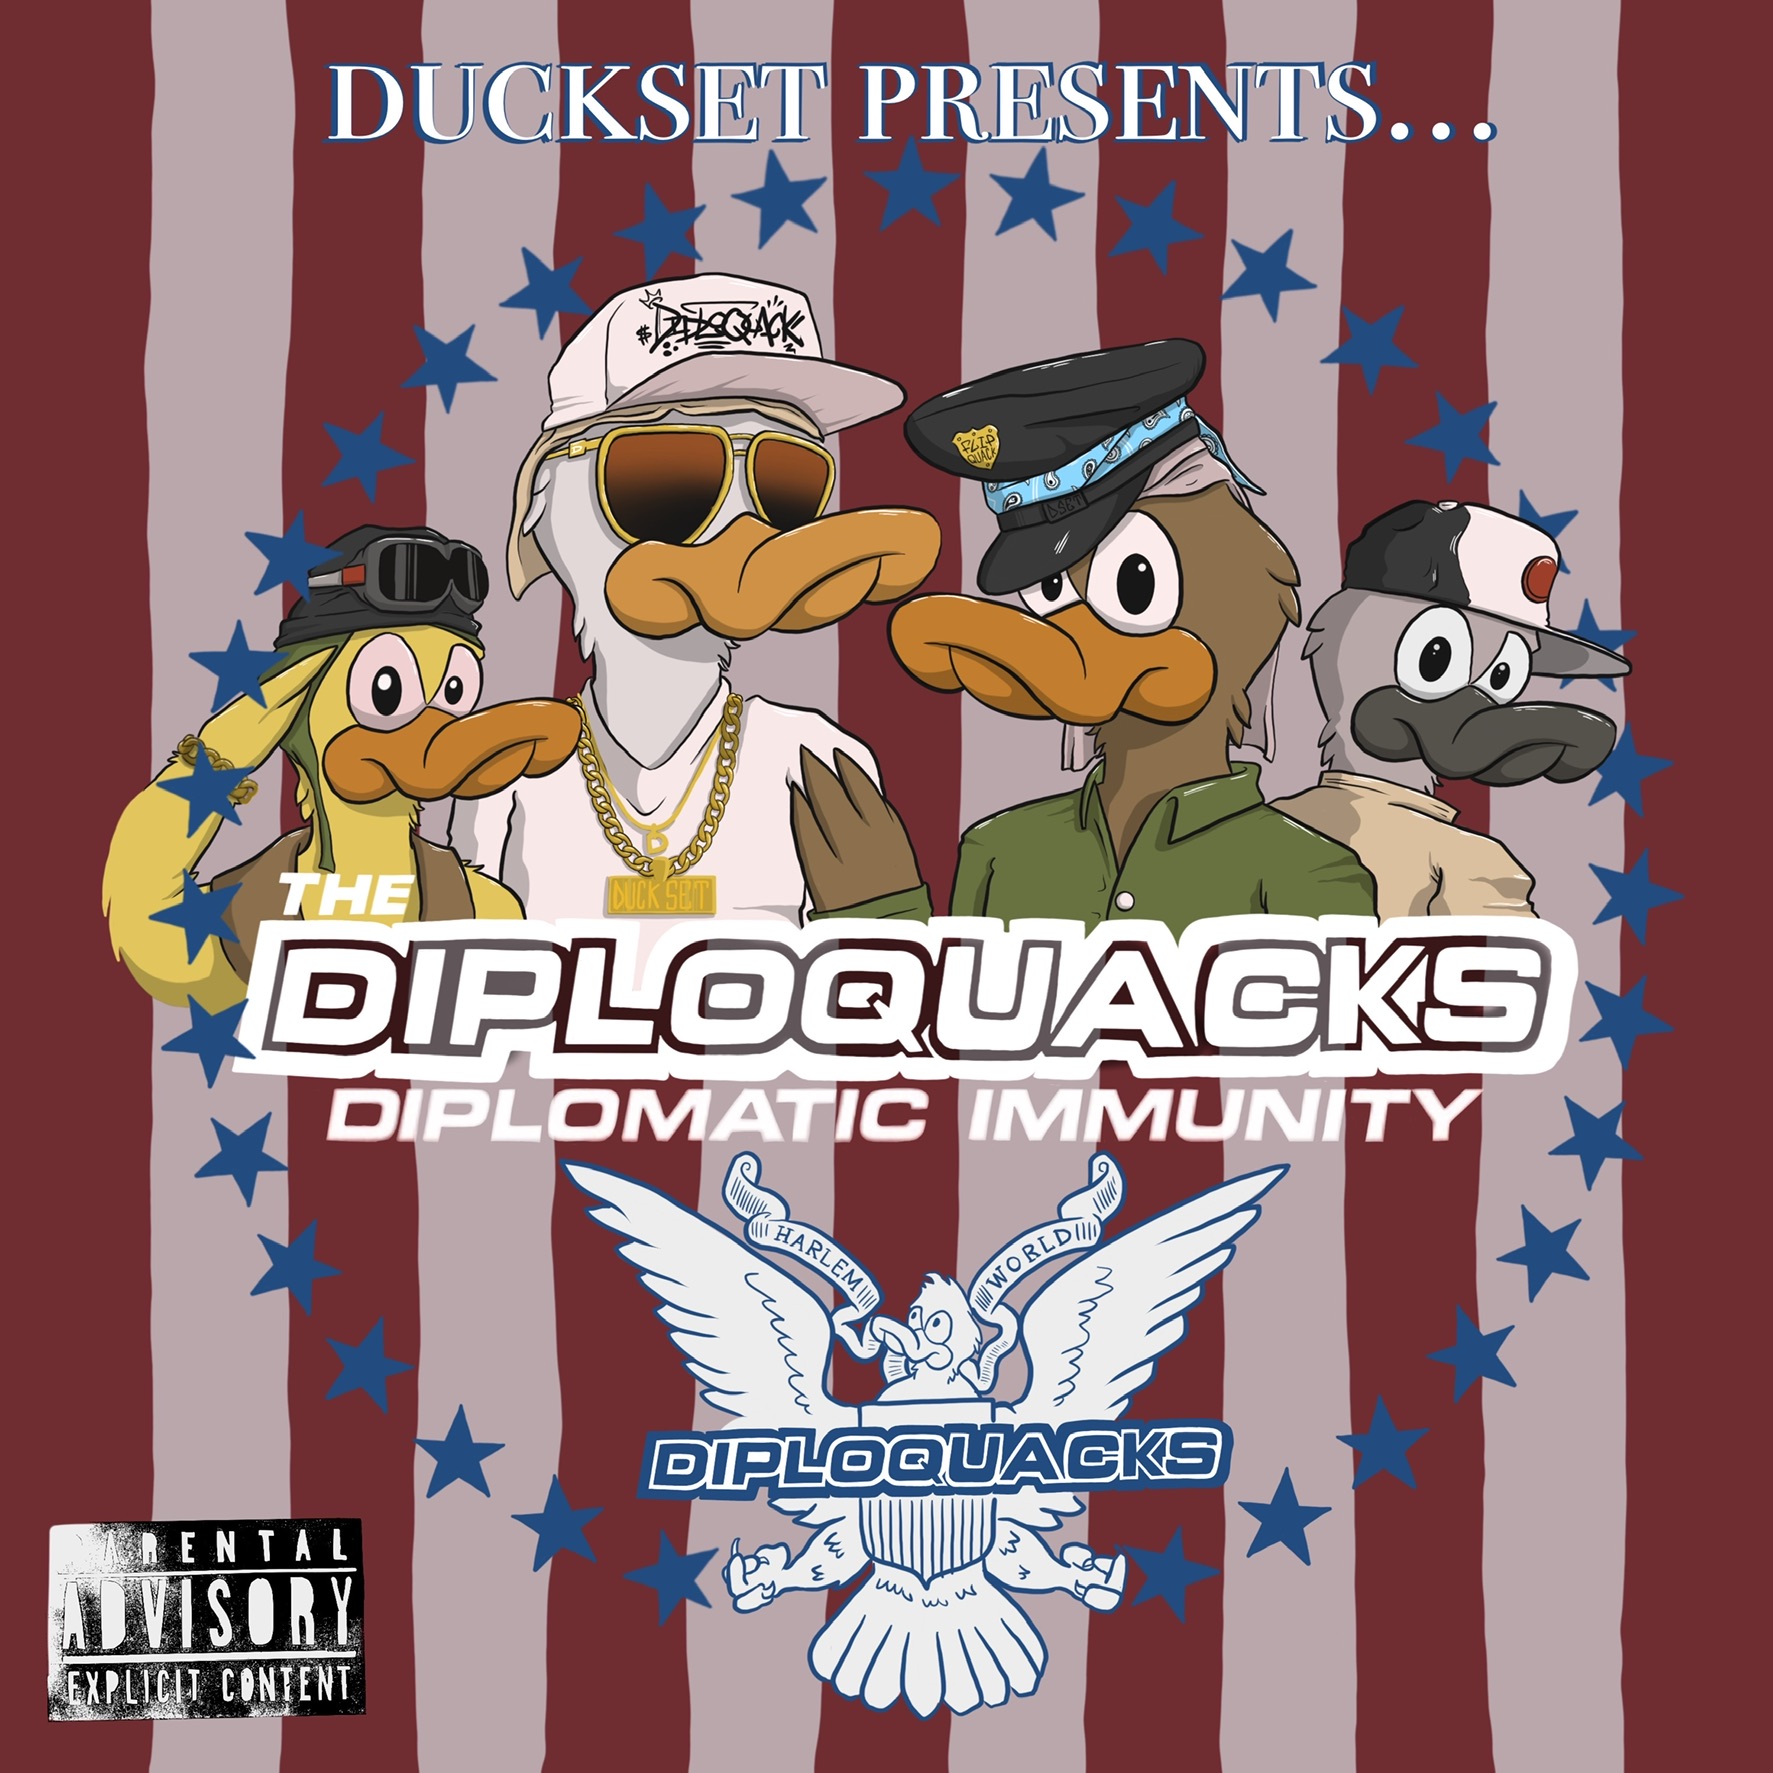 DucksetDiploquacks banner